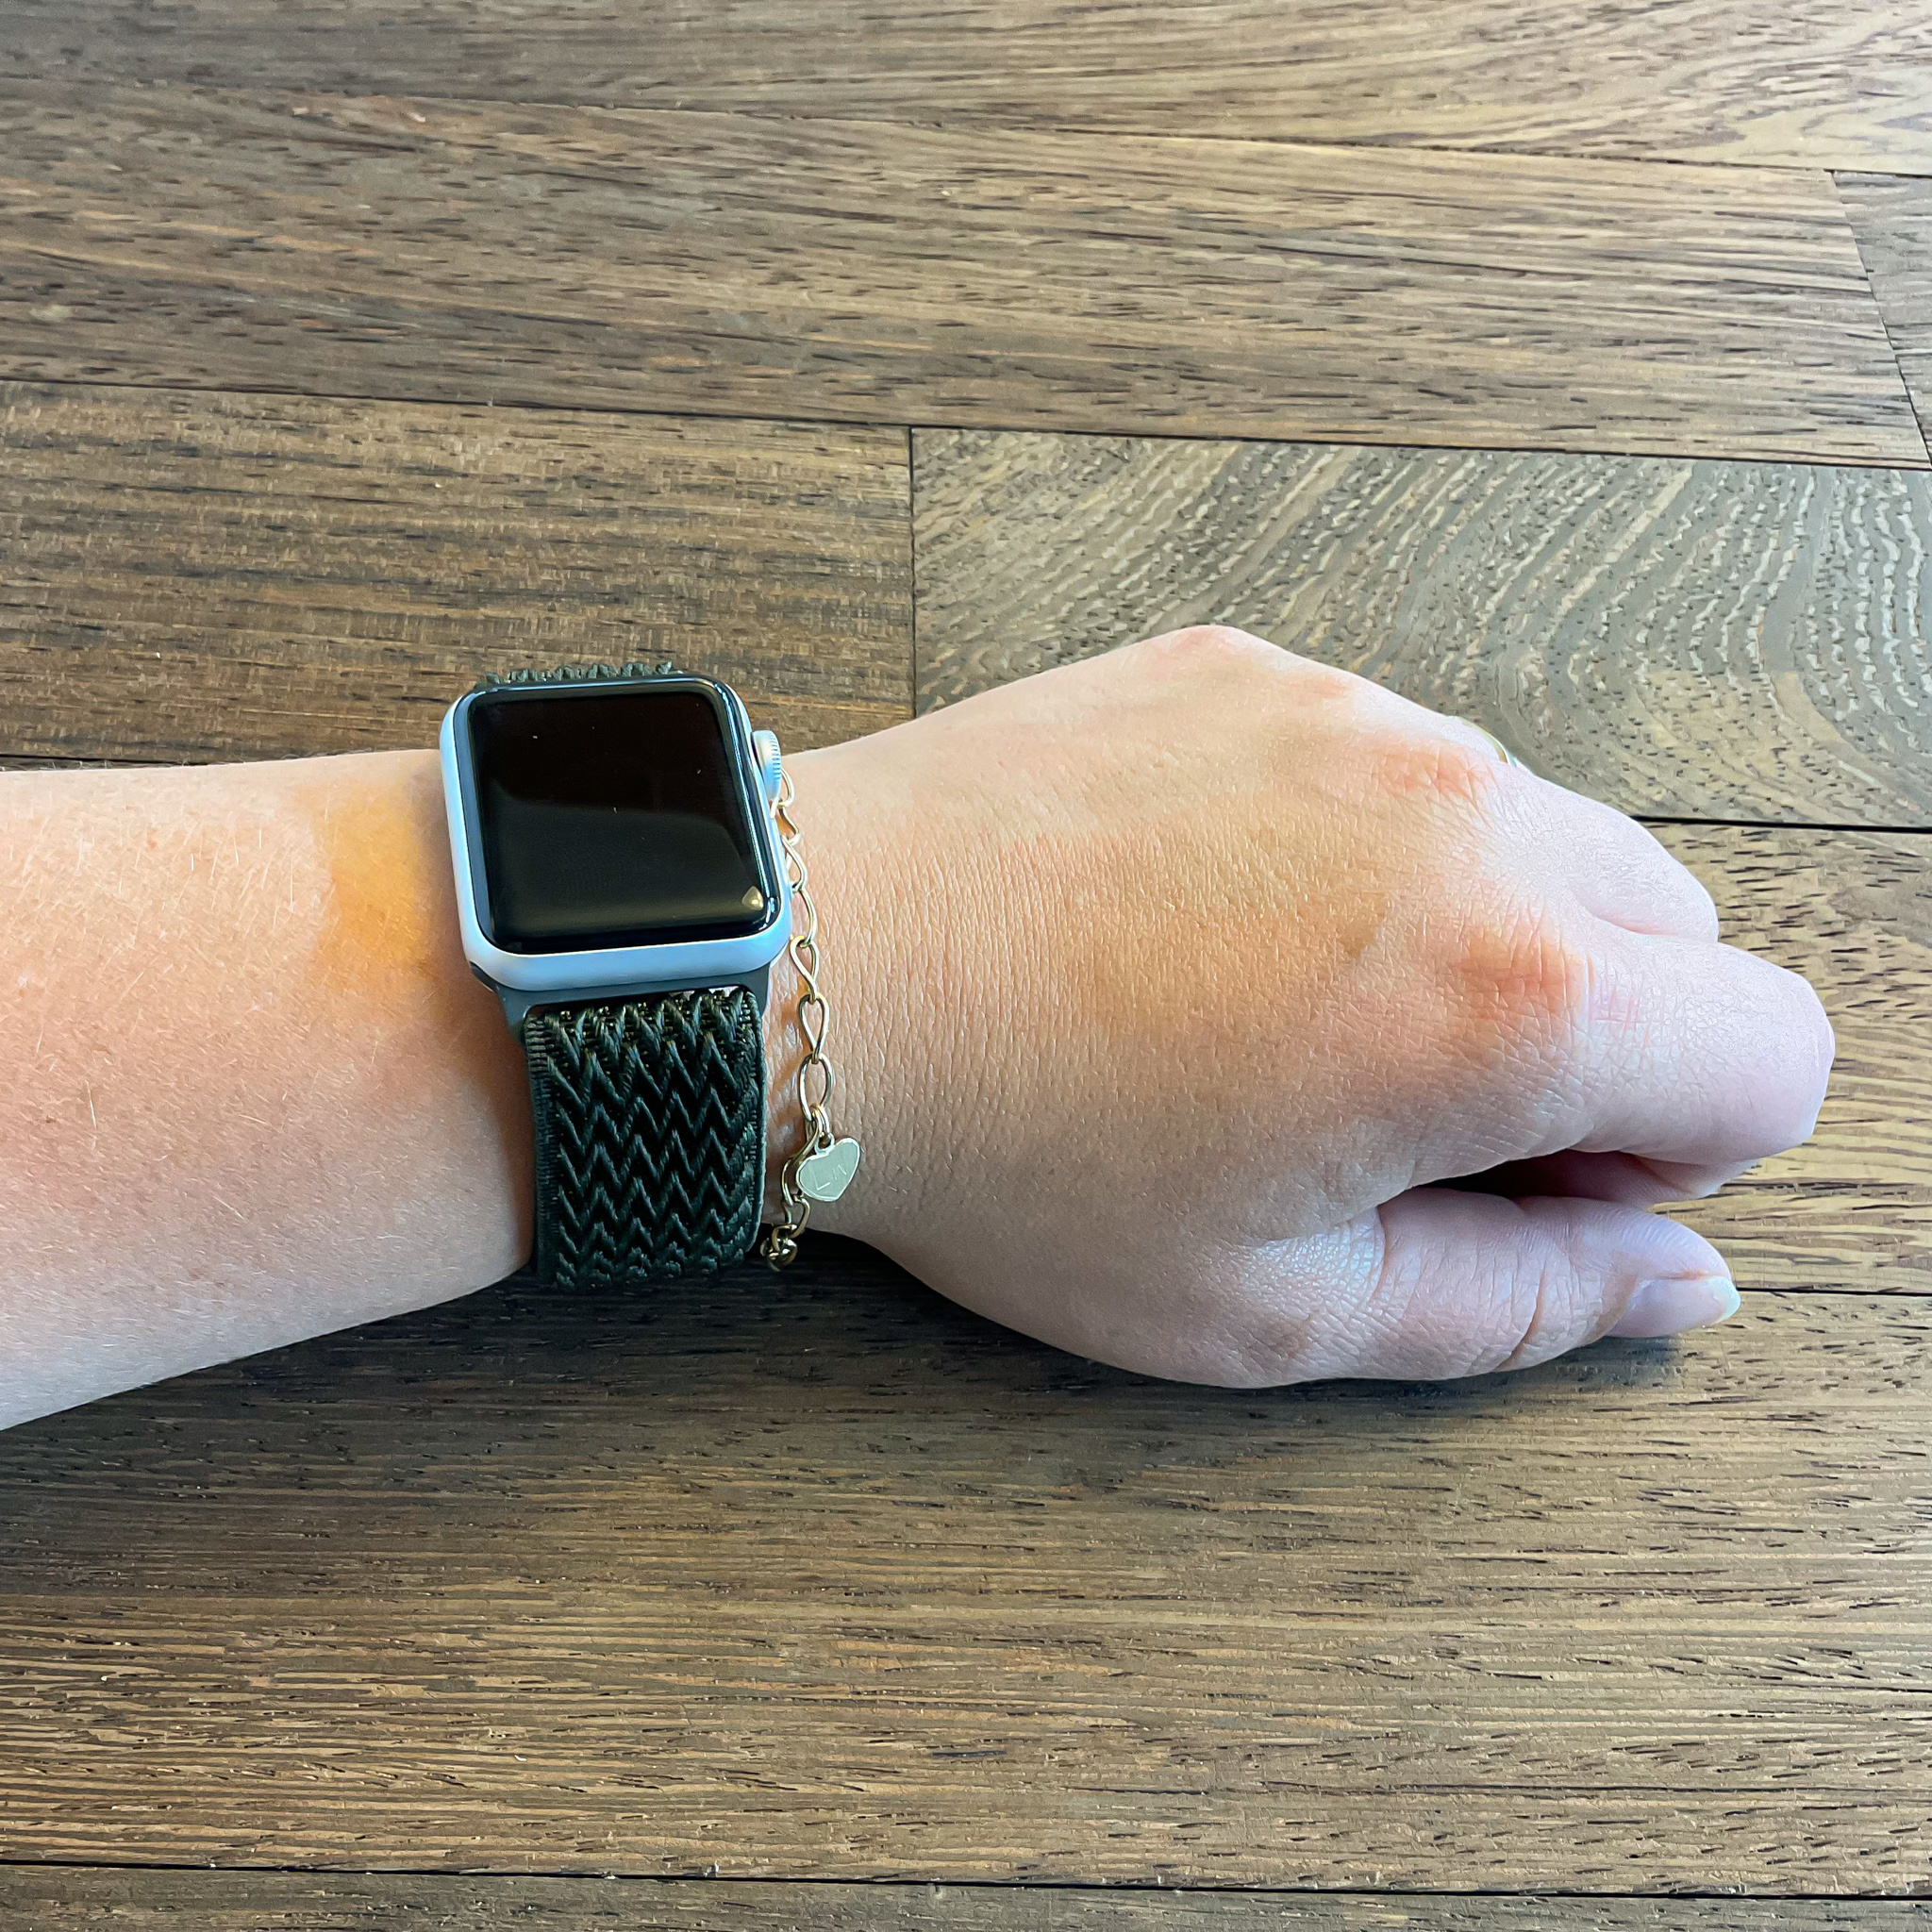 Apple Watch Nylon Solo Loop - Armee grün